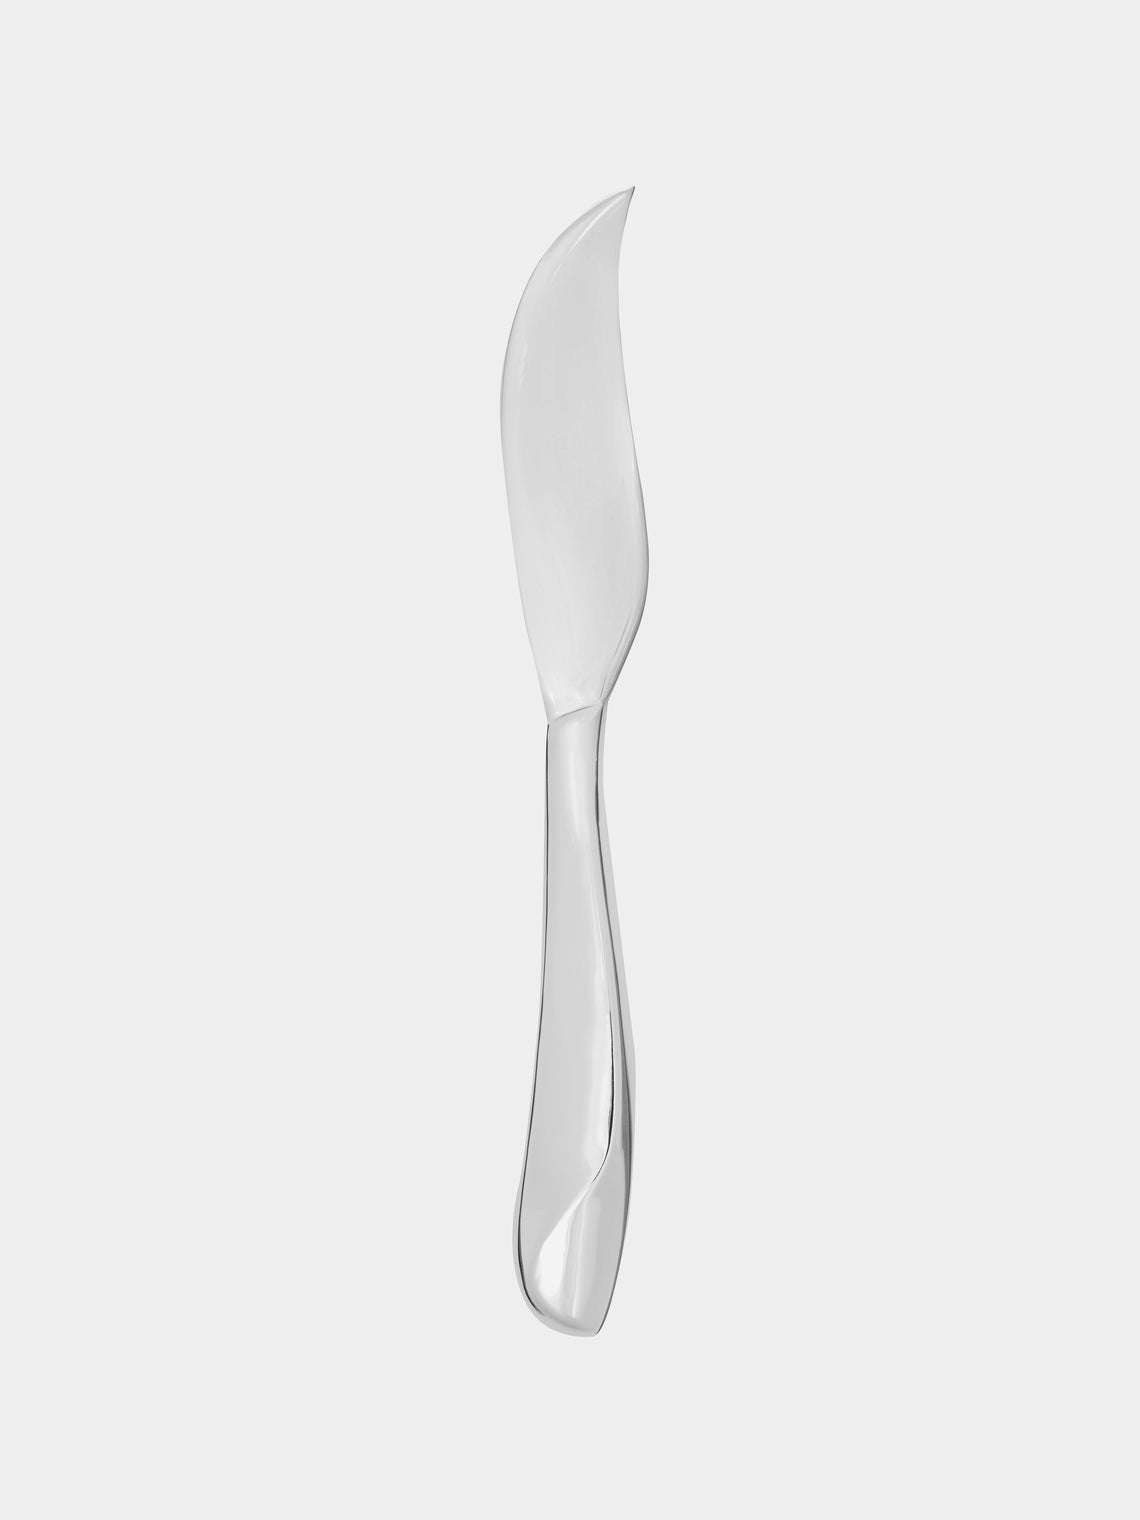 Wiener Silber Manufactur - Josef Hoffmann 135 Silver-Plated Fish Knife - Silver - ABASK - 